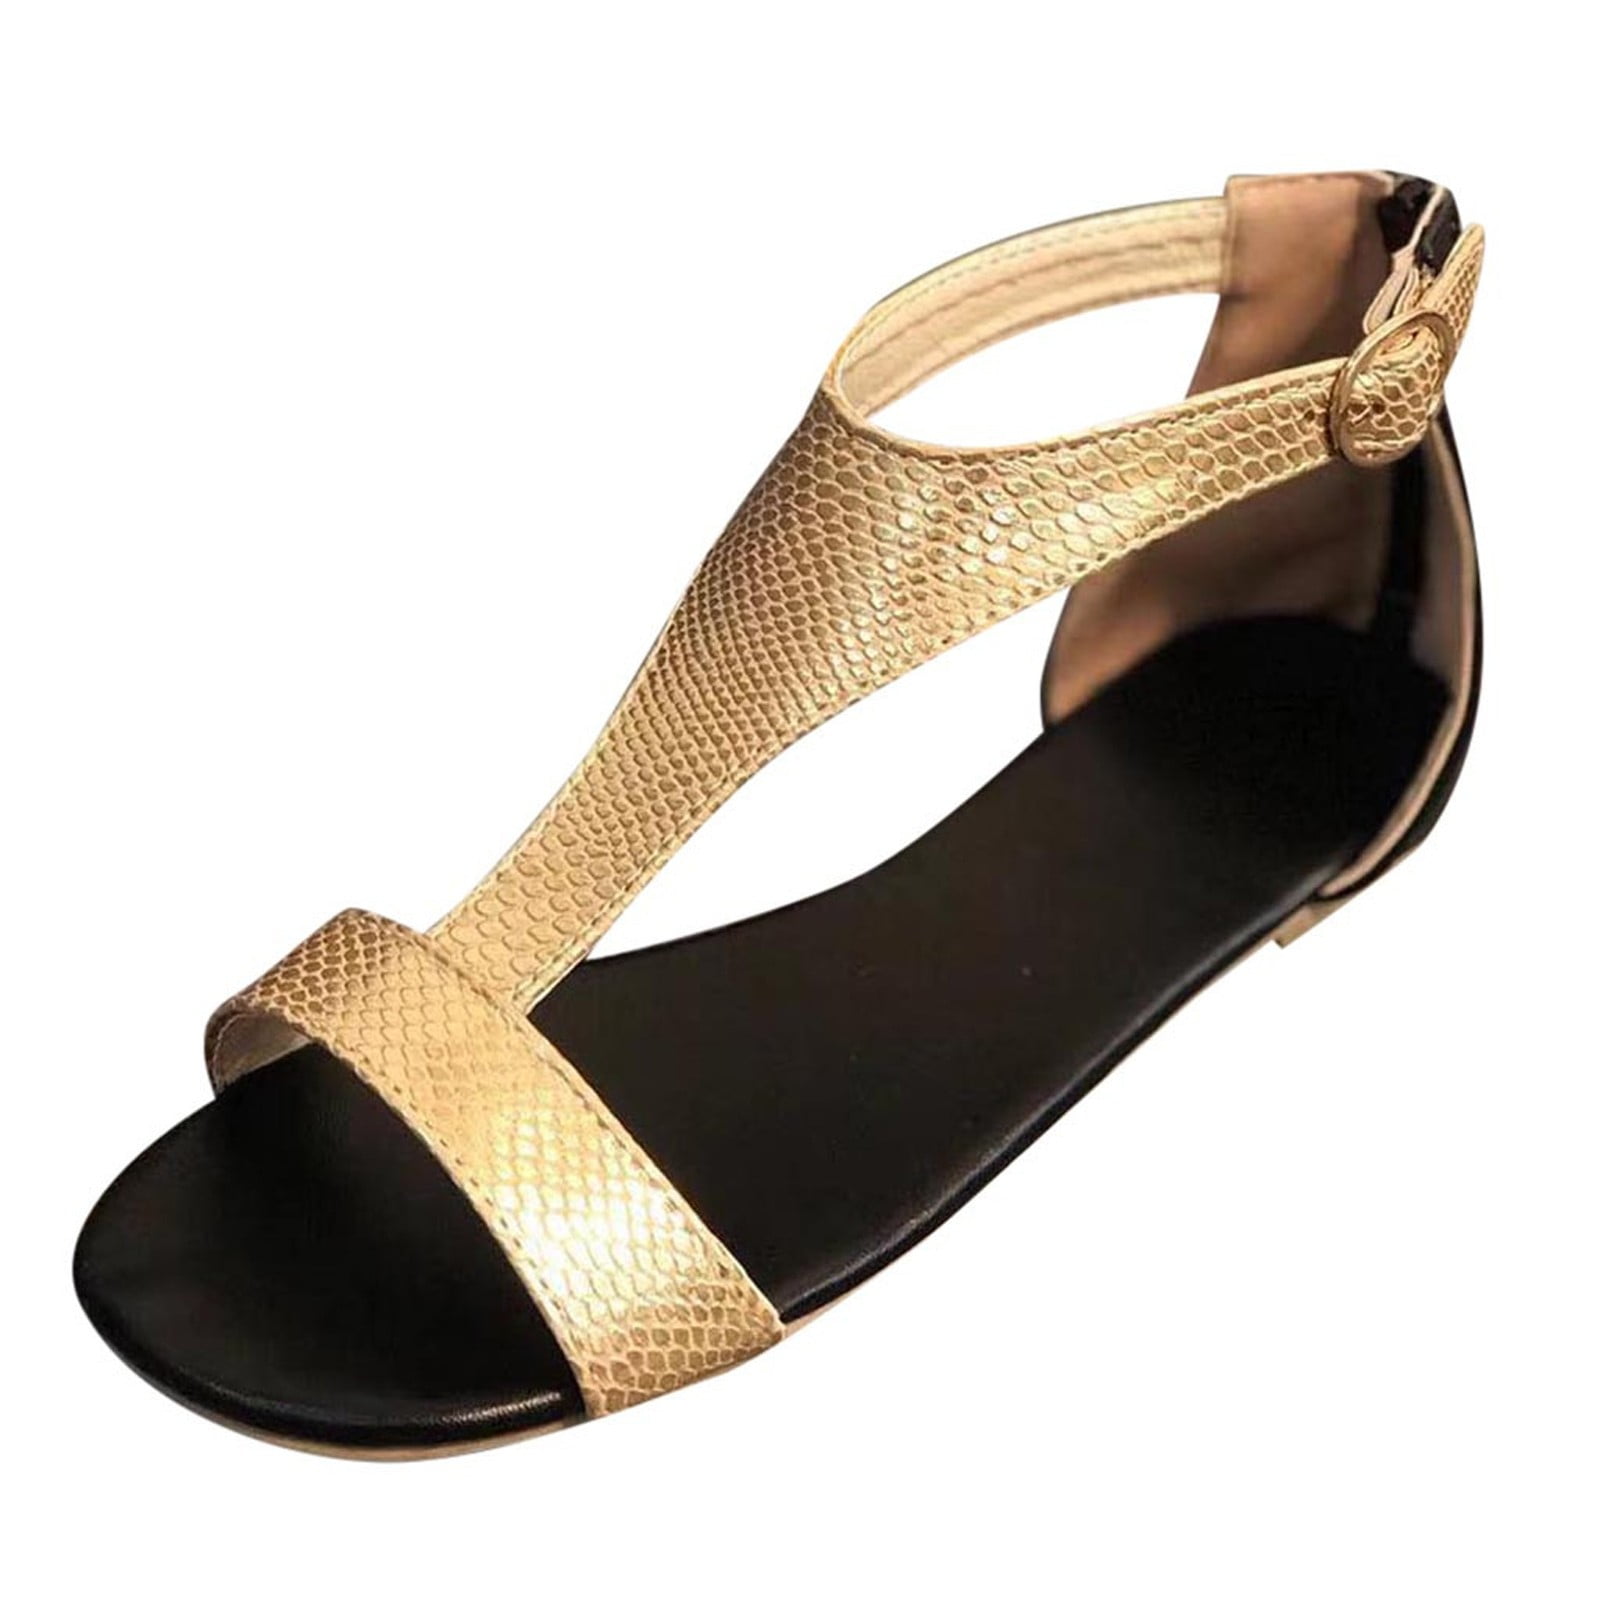 Aayomet Summer Sandals Beach Shoes Sandals Strap Casual Open Summer Toe Women  Buckle Breathable Flat Women's sandals,Gold 8 